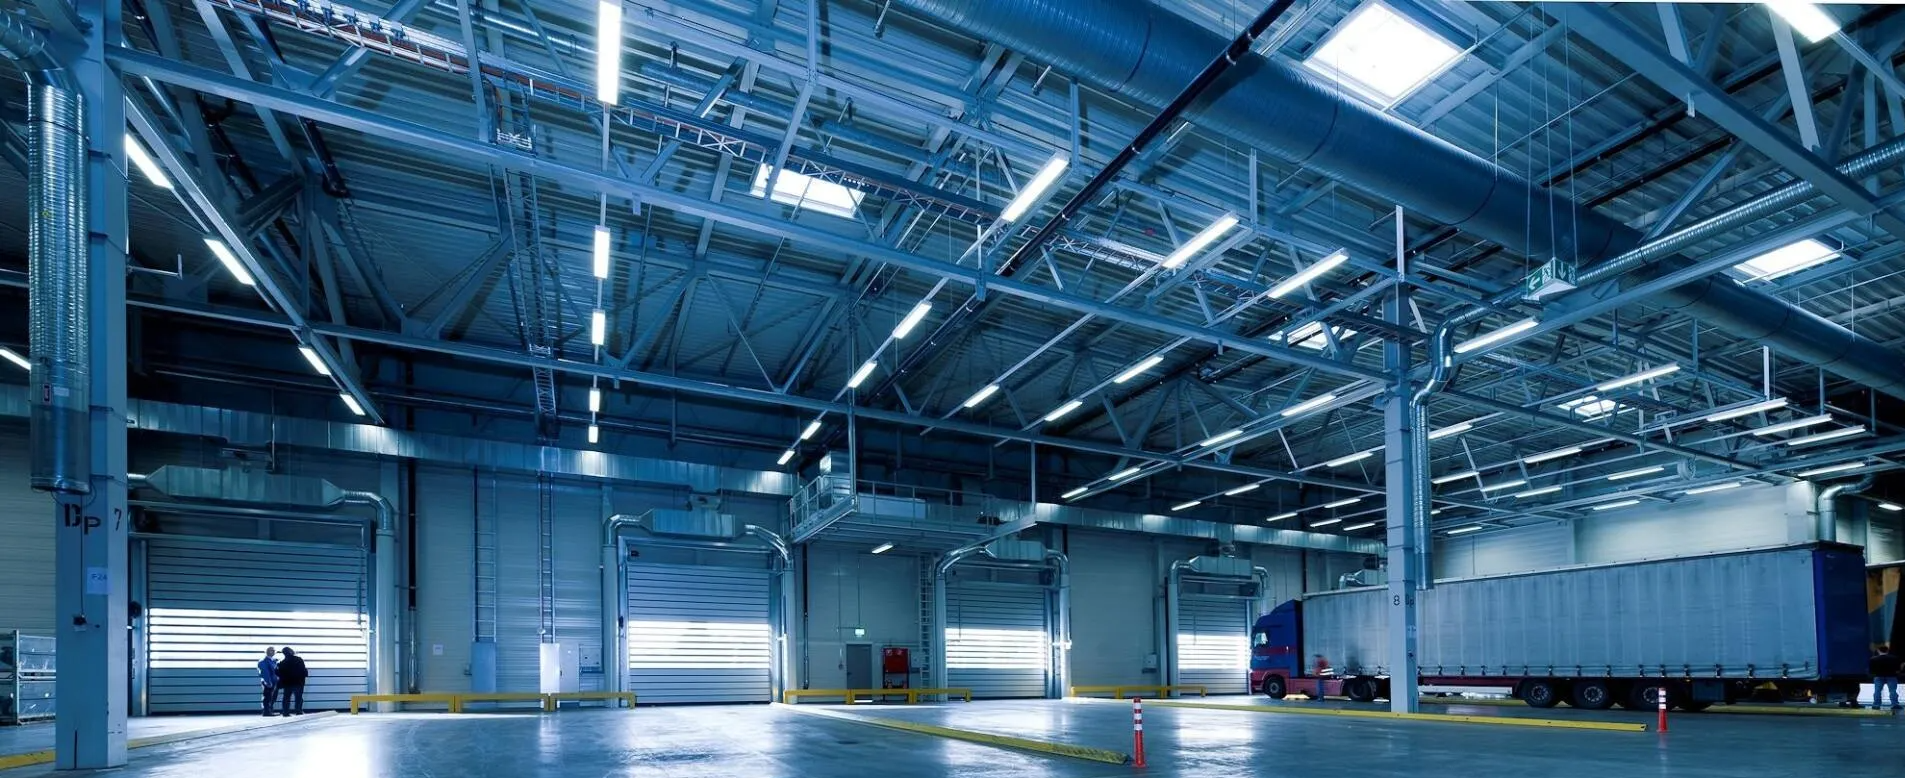 trucking warehouse after a lighting retrofit